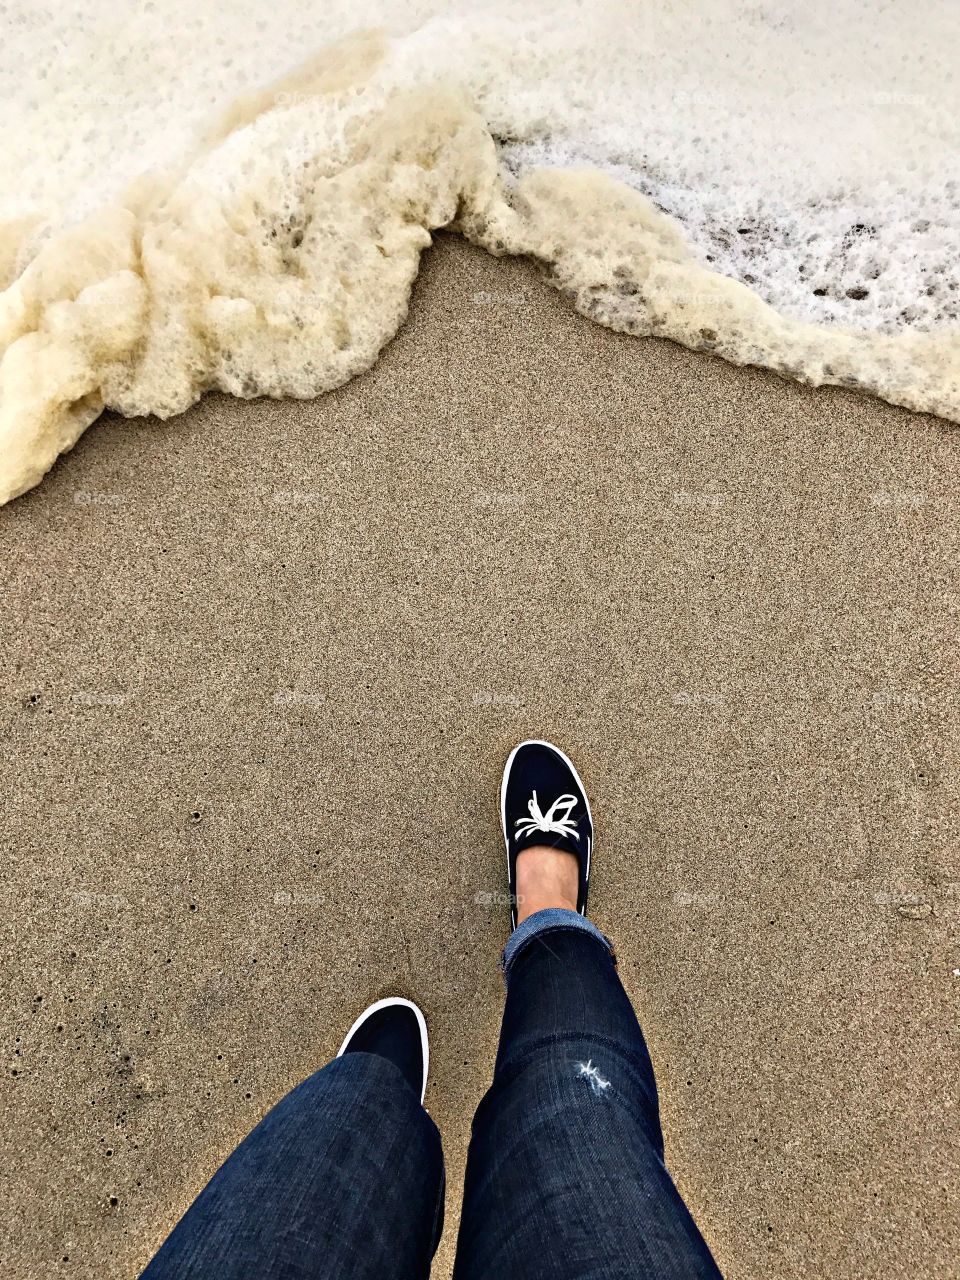 Stepping into sea foam. 